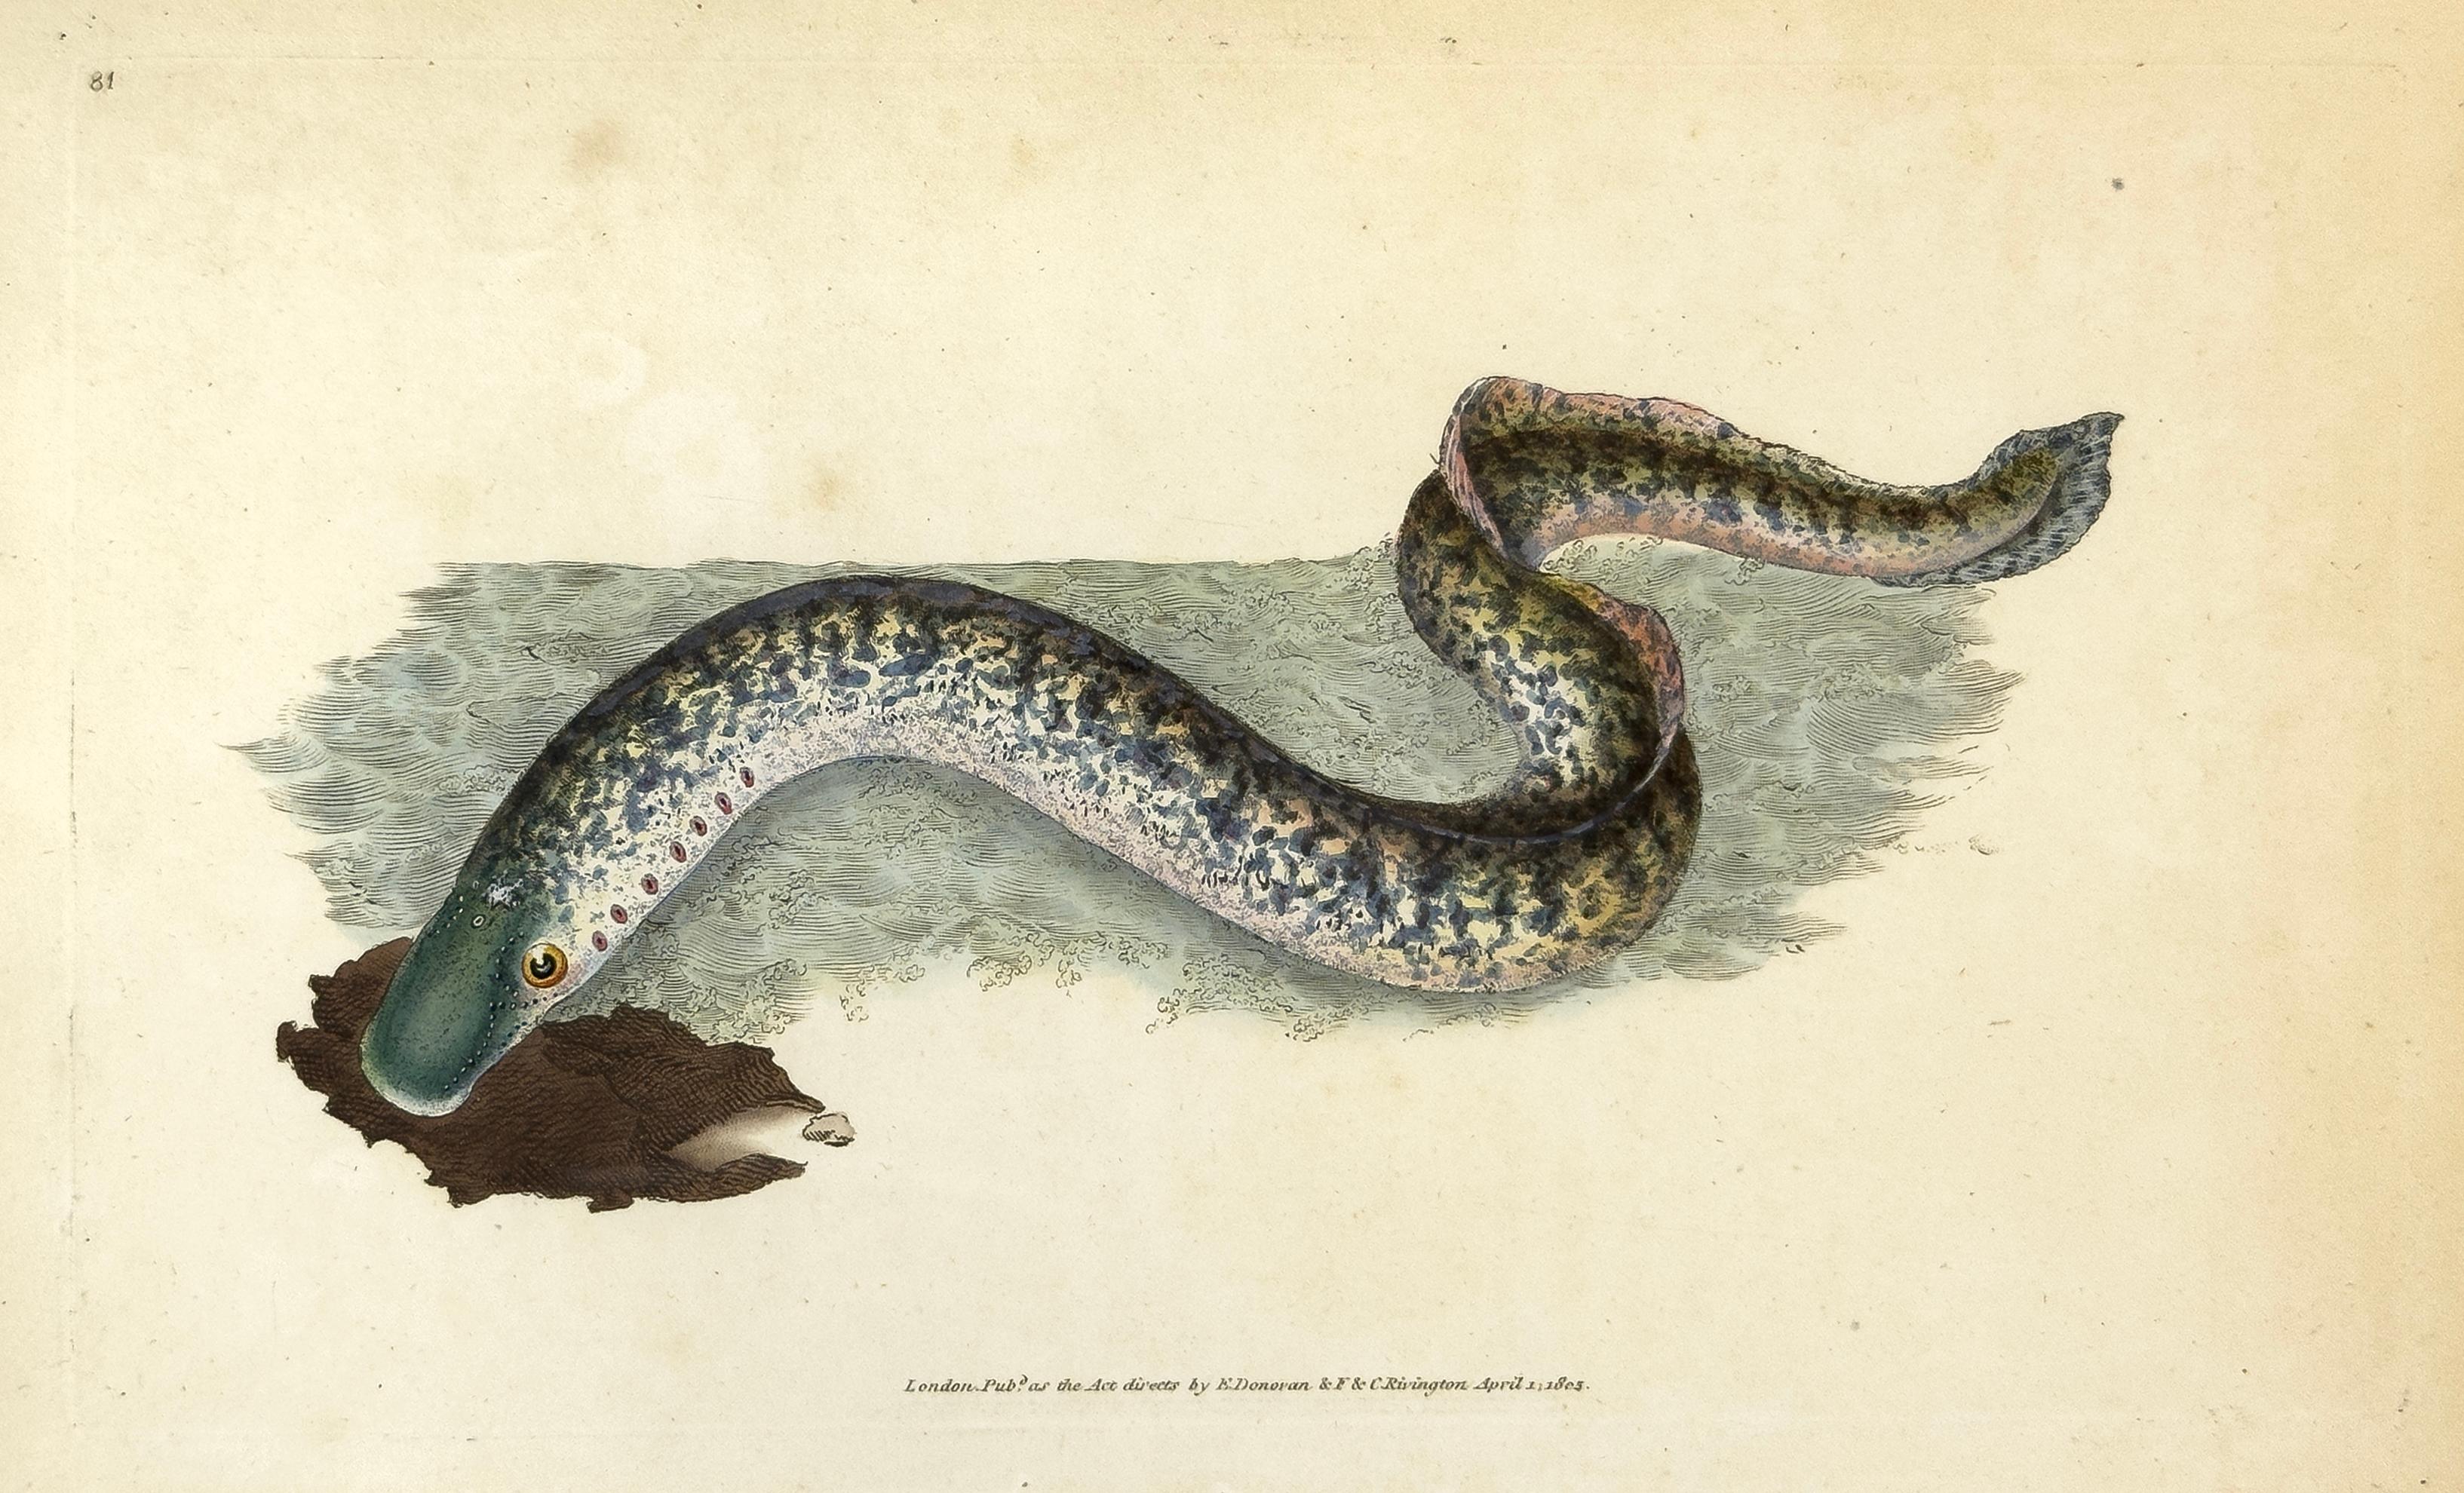 Edward Donovan Animal Print – 81: Petromyzon Marinus, Marine oder gepunkteter Lamprey